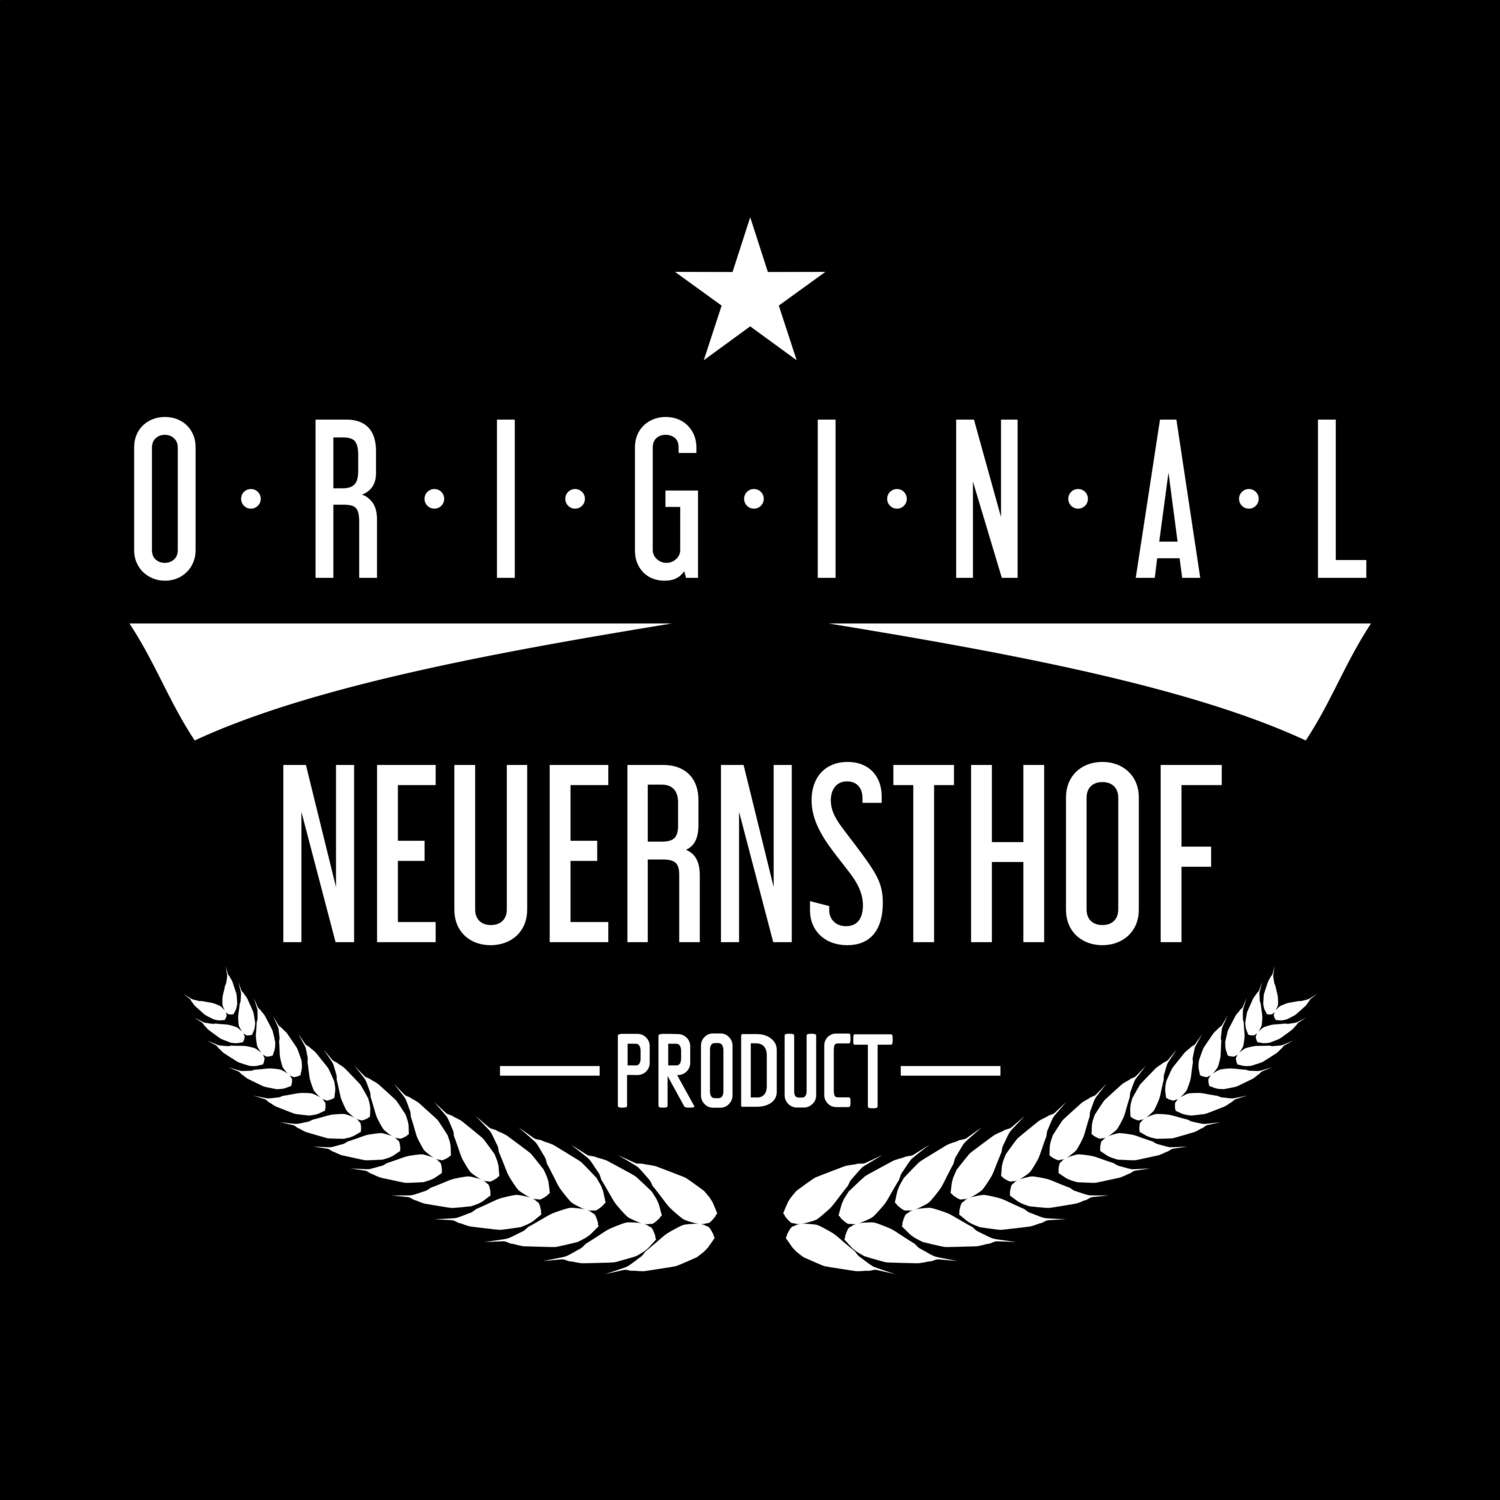 Neuernsthof T-Shirt »Original Product«